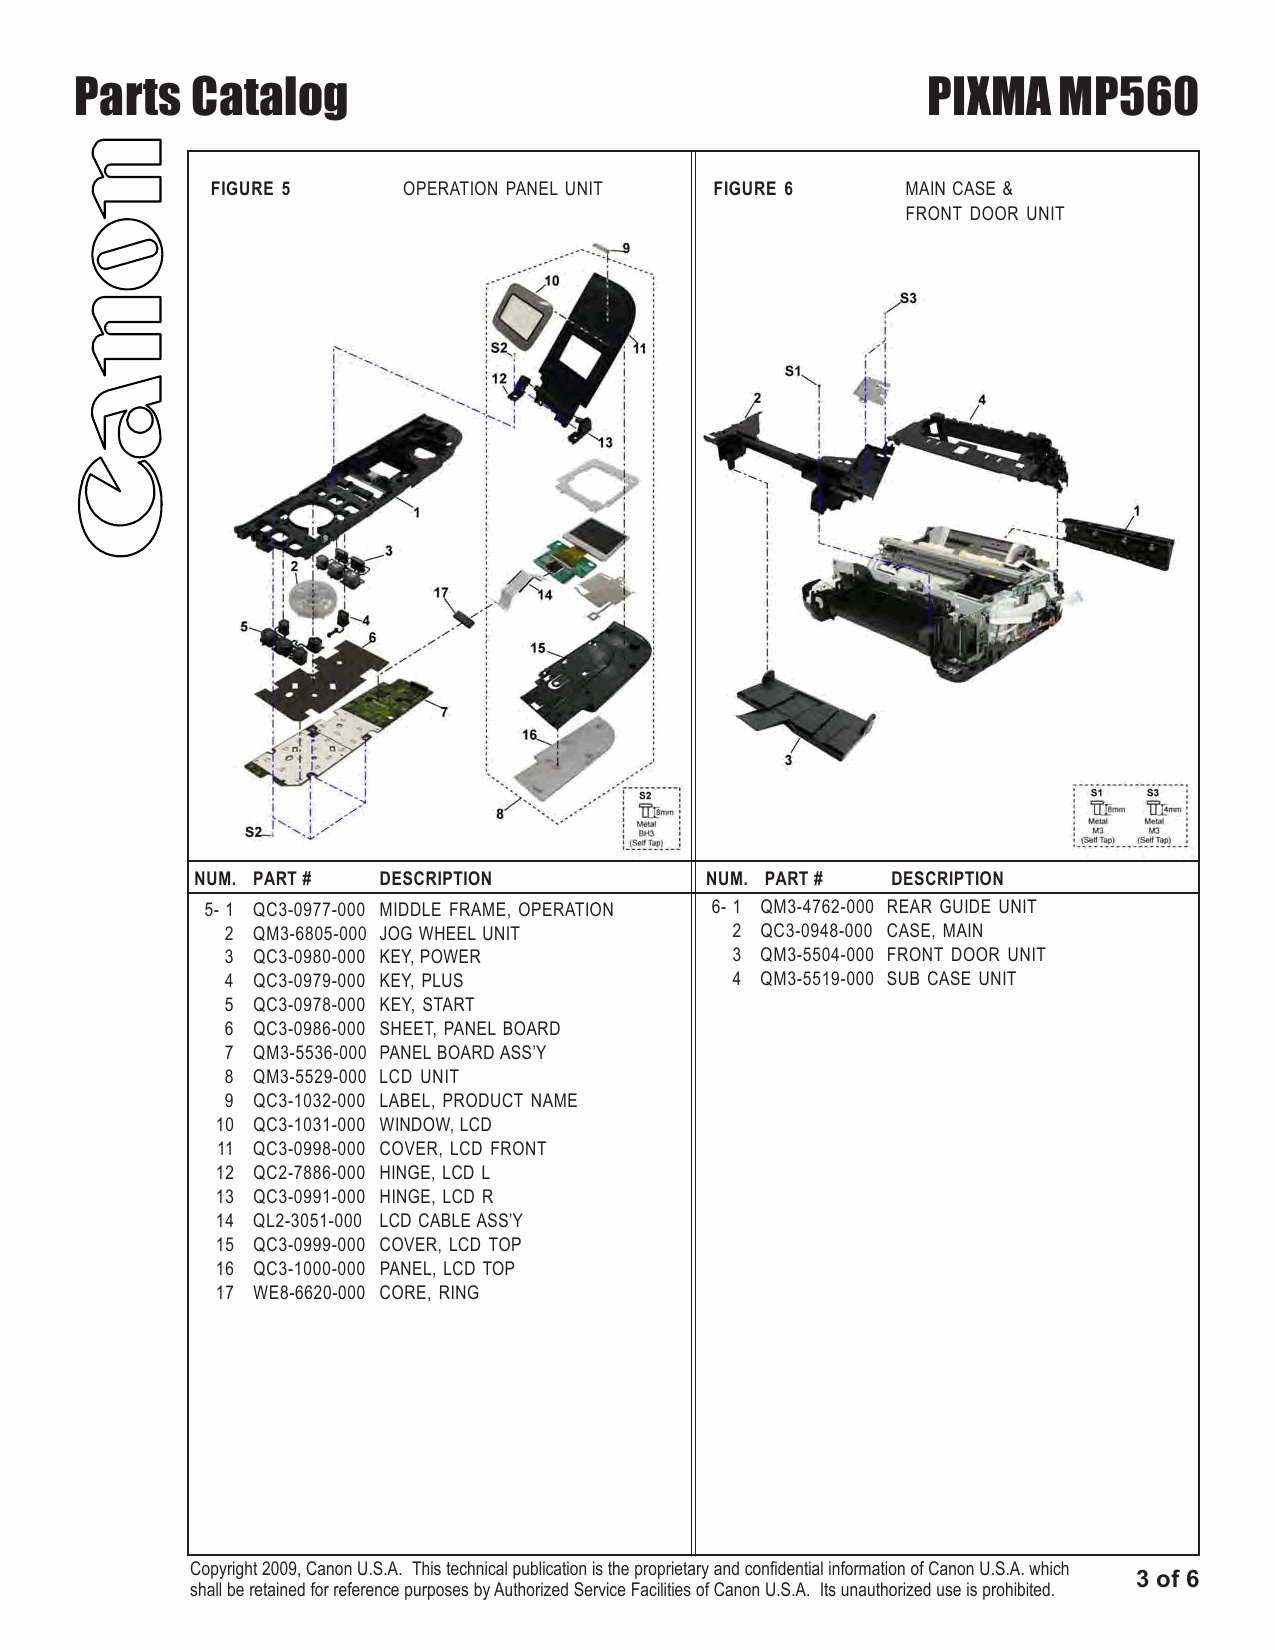 Canon PIXMA MP560 Parts Catalog Manual-4